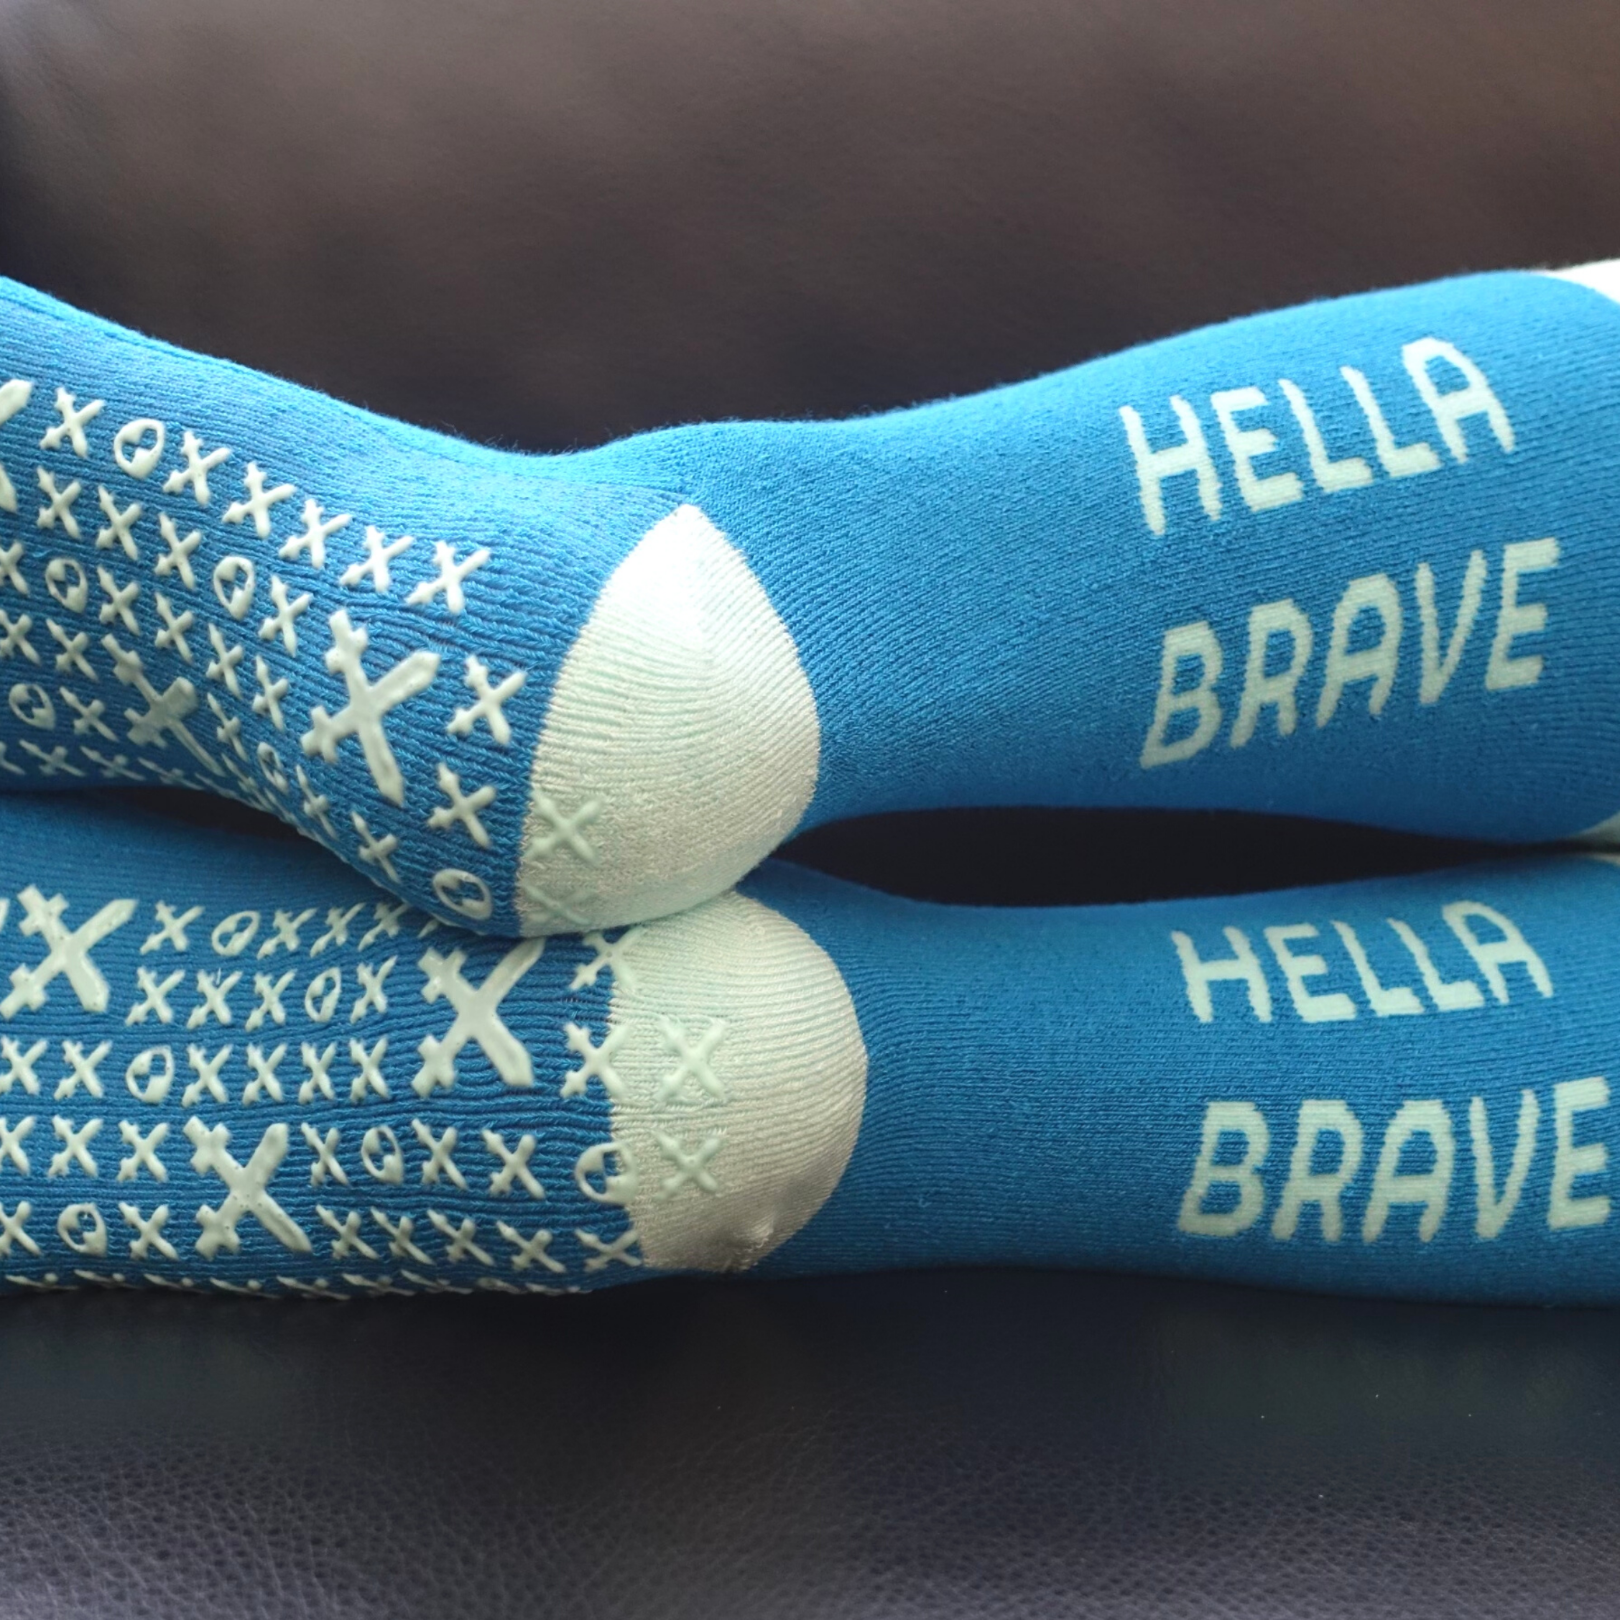 Hella Brave Hospital Grip Sock